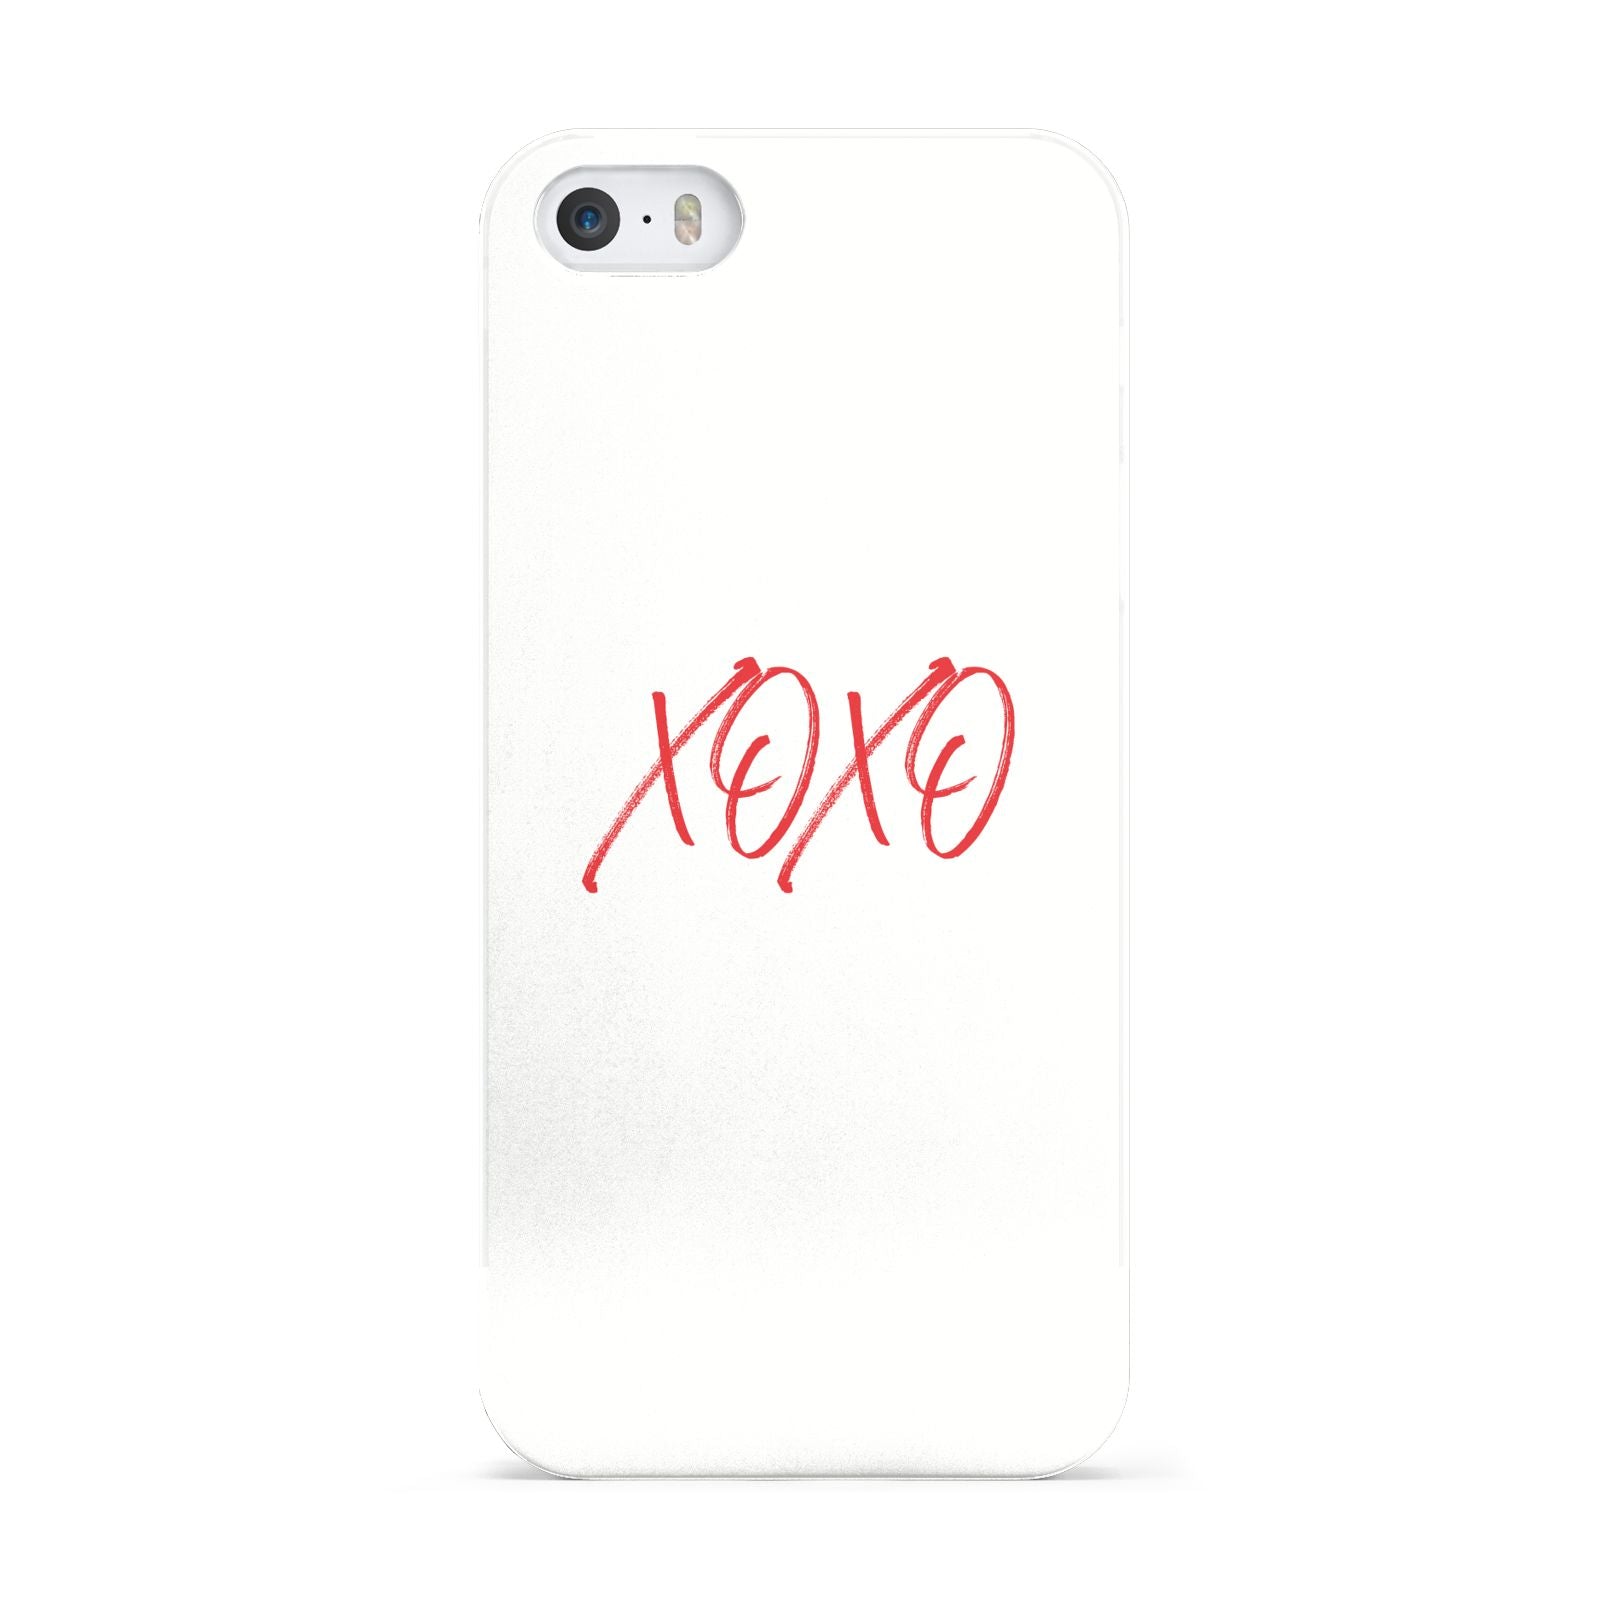 I love you like xo Apple iPhone 5 Case